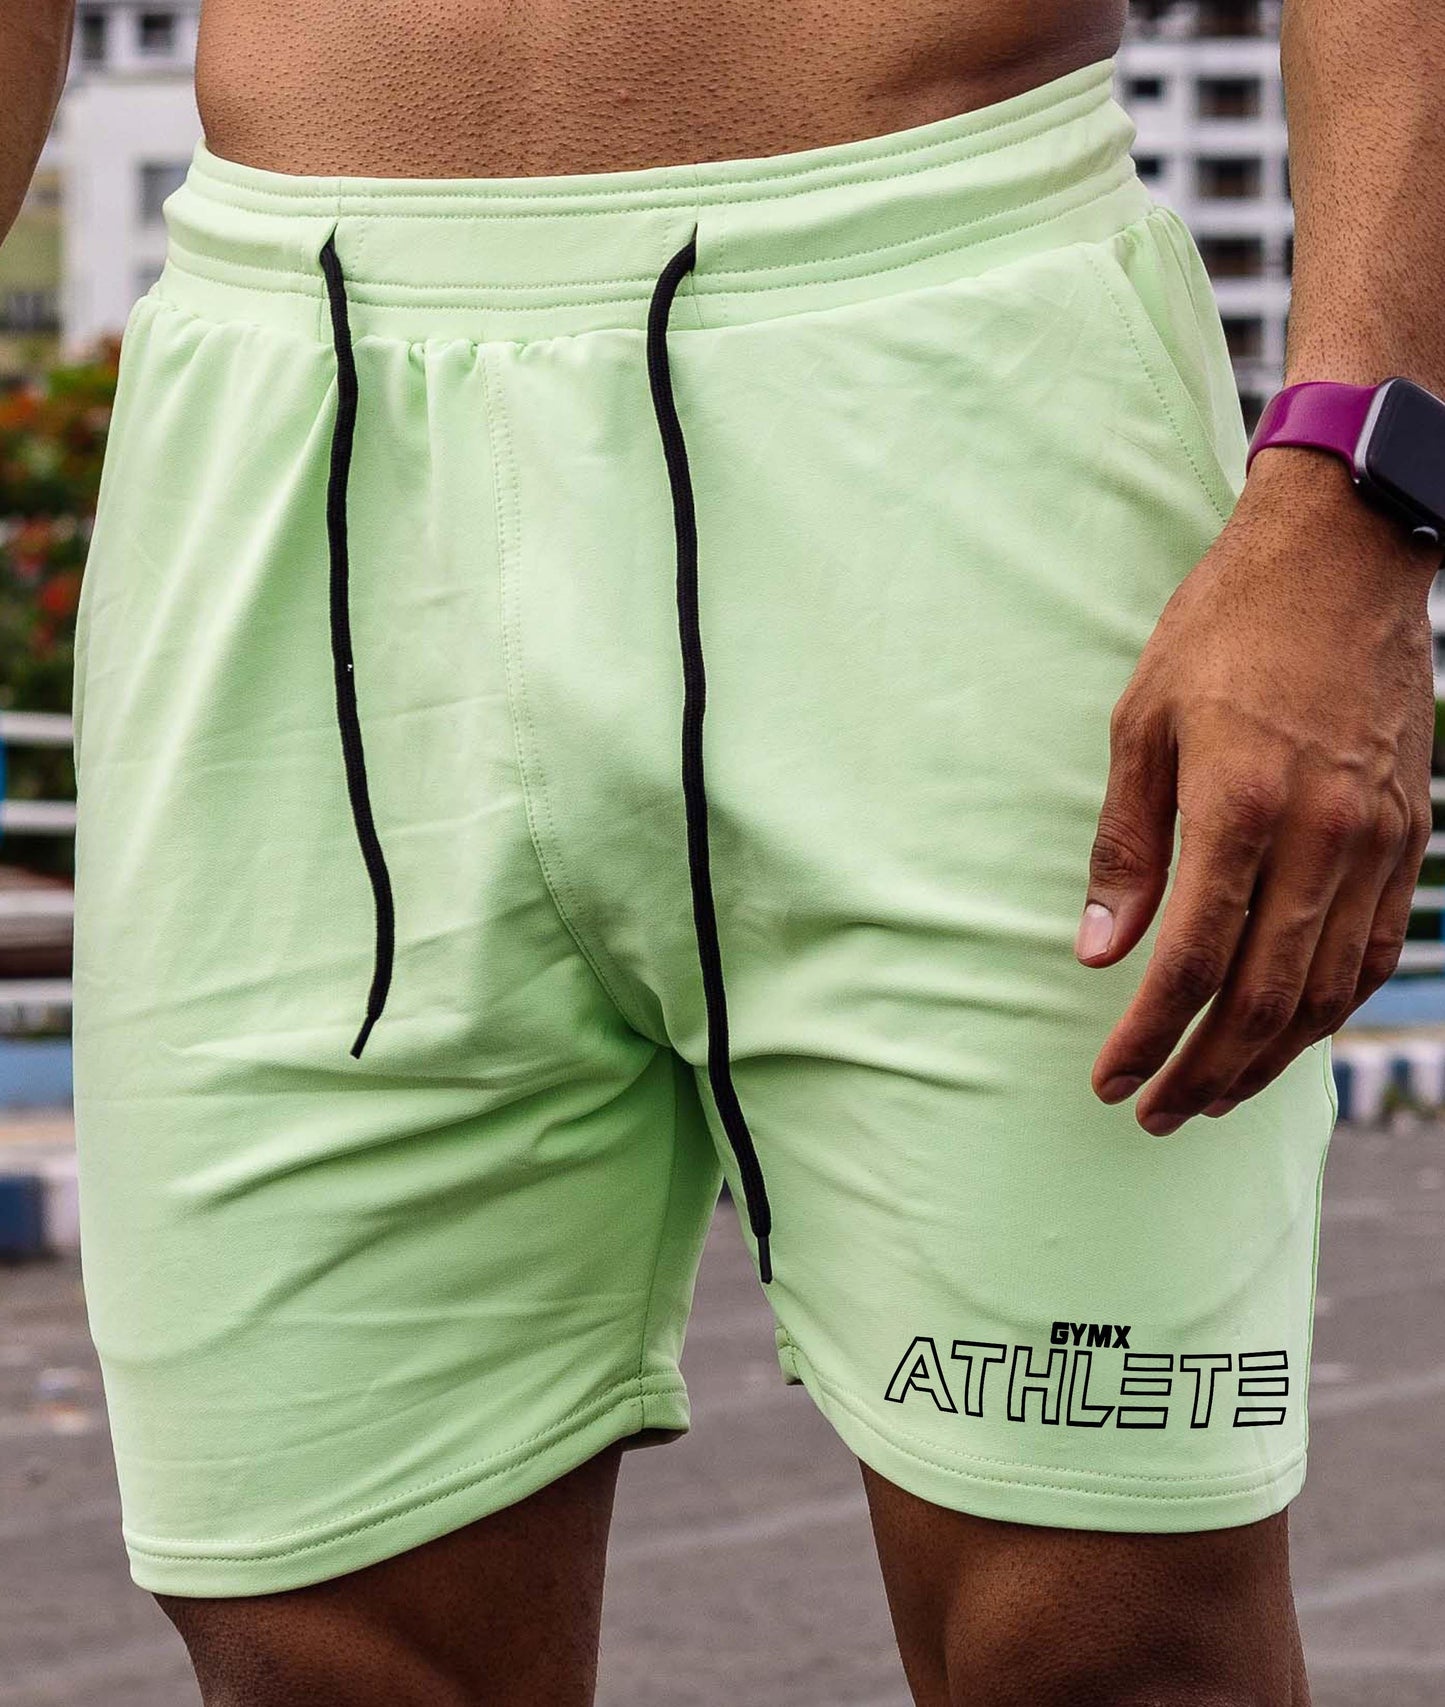 Oversized GymX Neon Green Shorts: Athlete